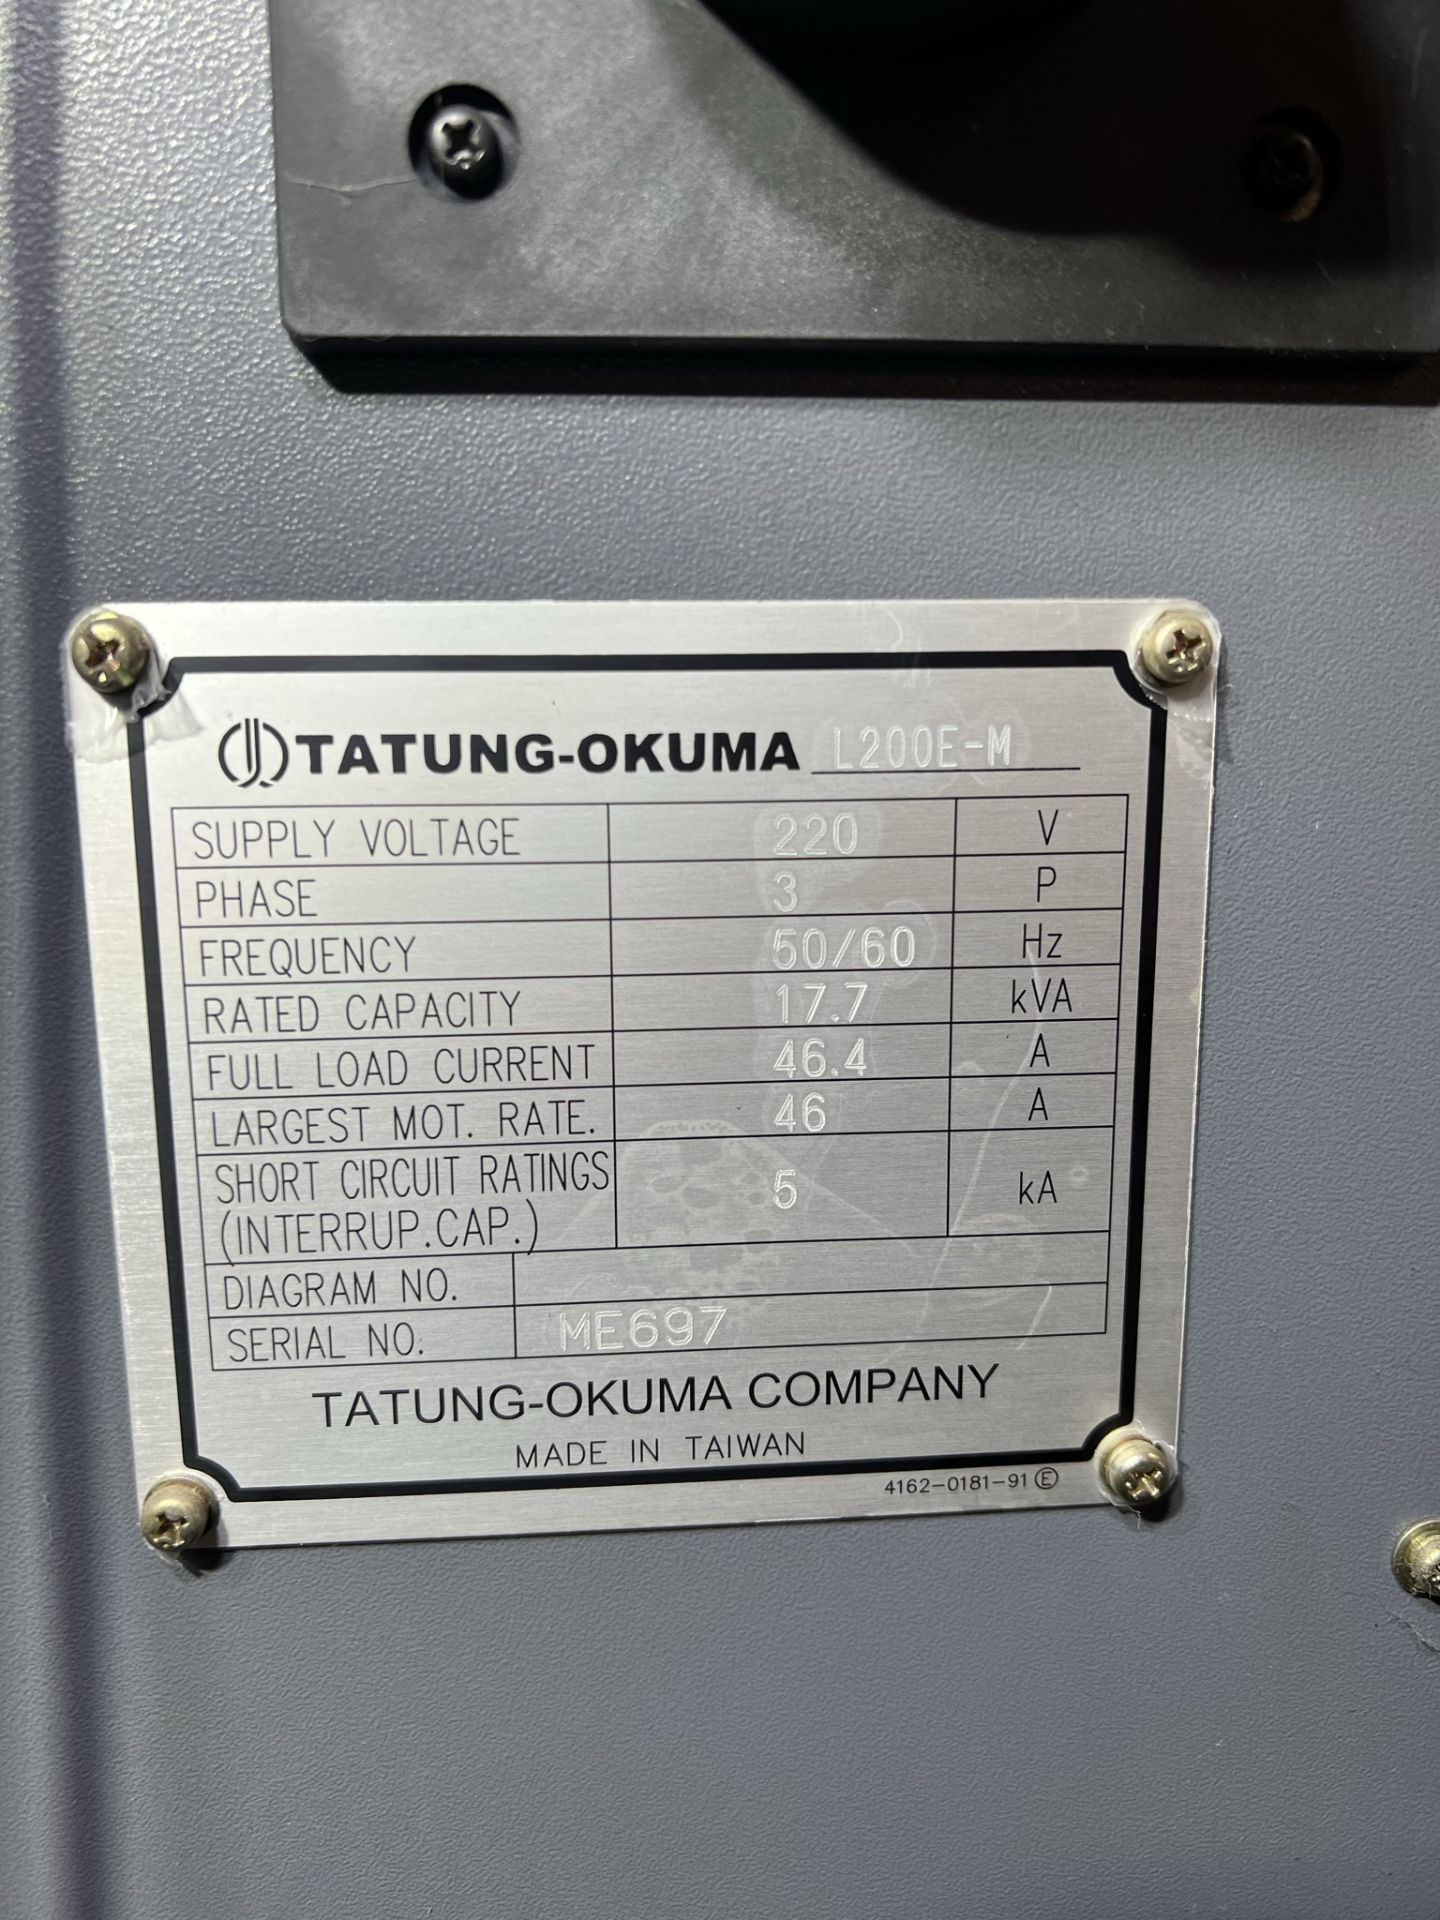 2014 OKUMA GENOS L200E-M CNC LATHE, S/N ME697, LIVE TOOLING, OSP-P200LA-R CNC CONTROL, 8" - Image 24 of 45